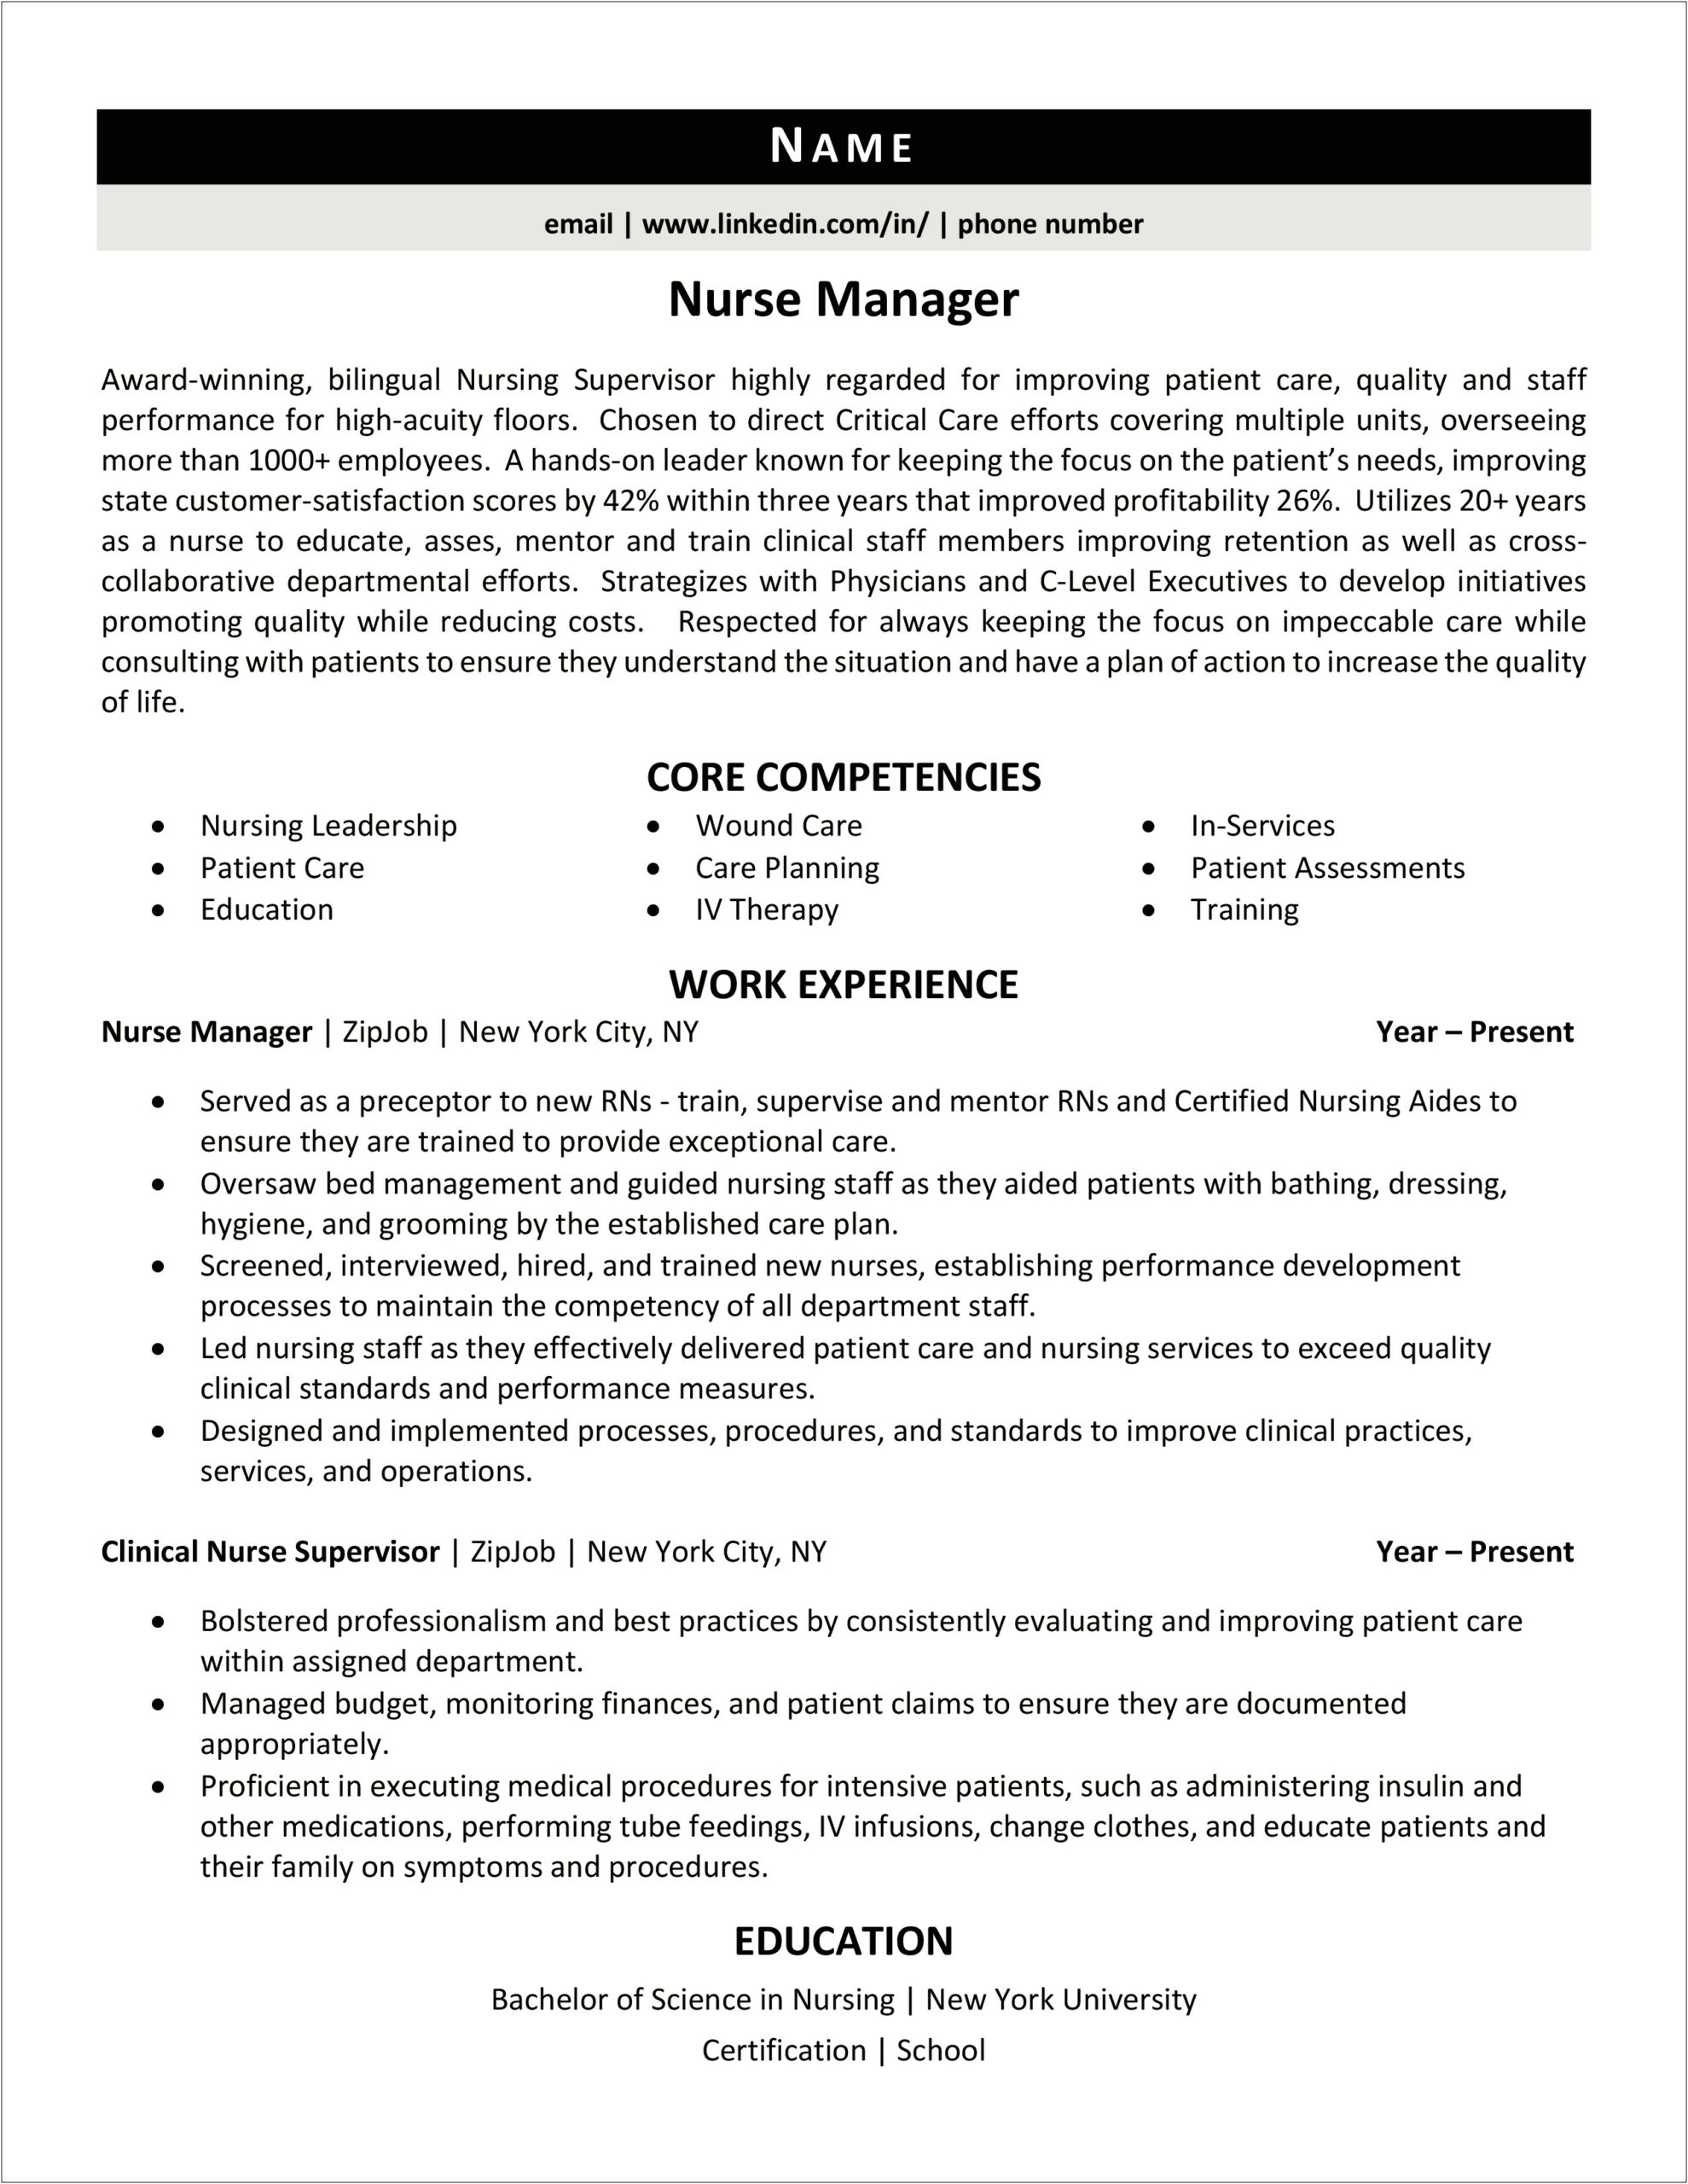 Sample Resume For Nurse Executive